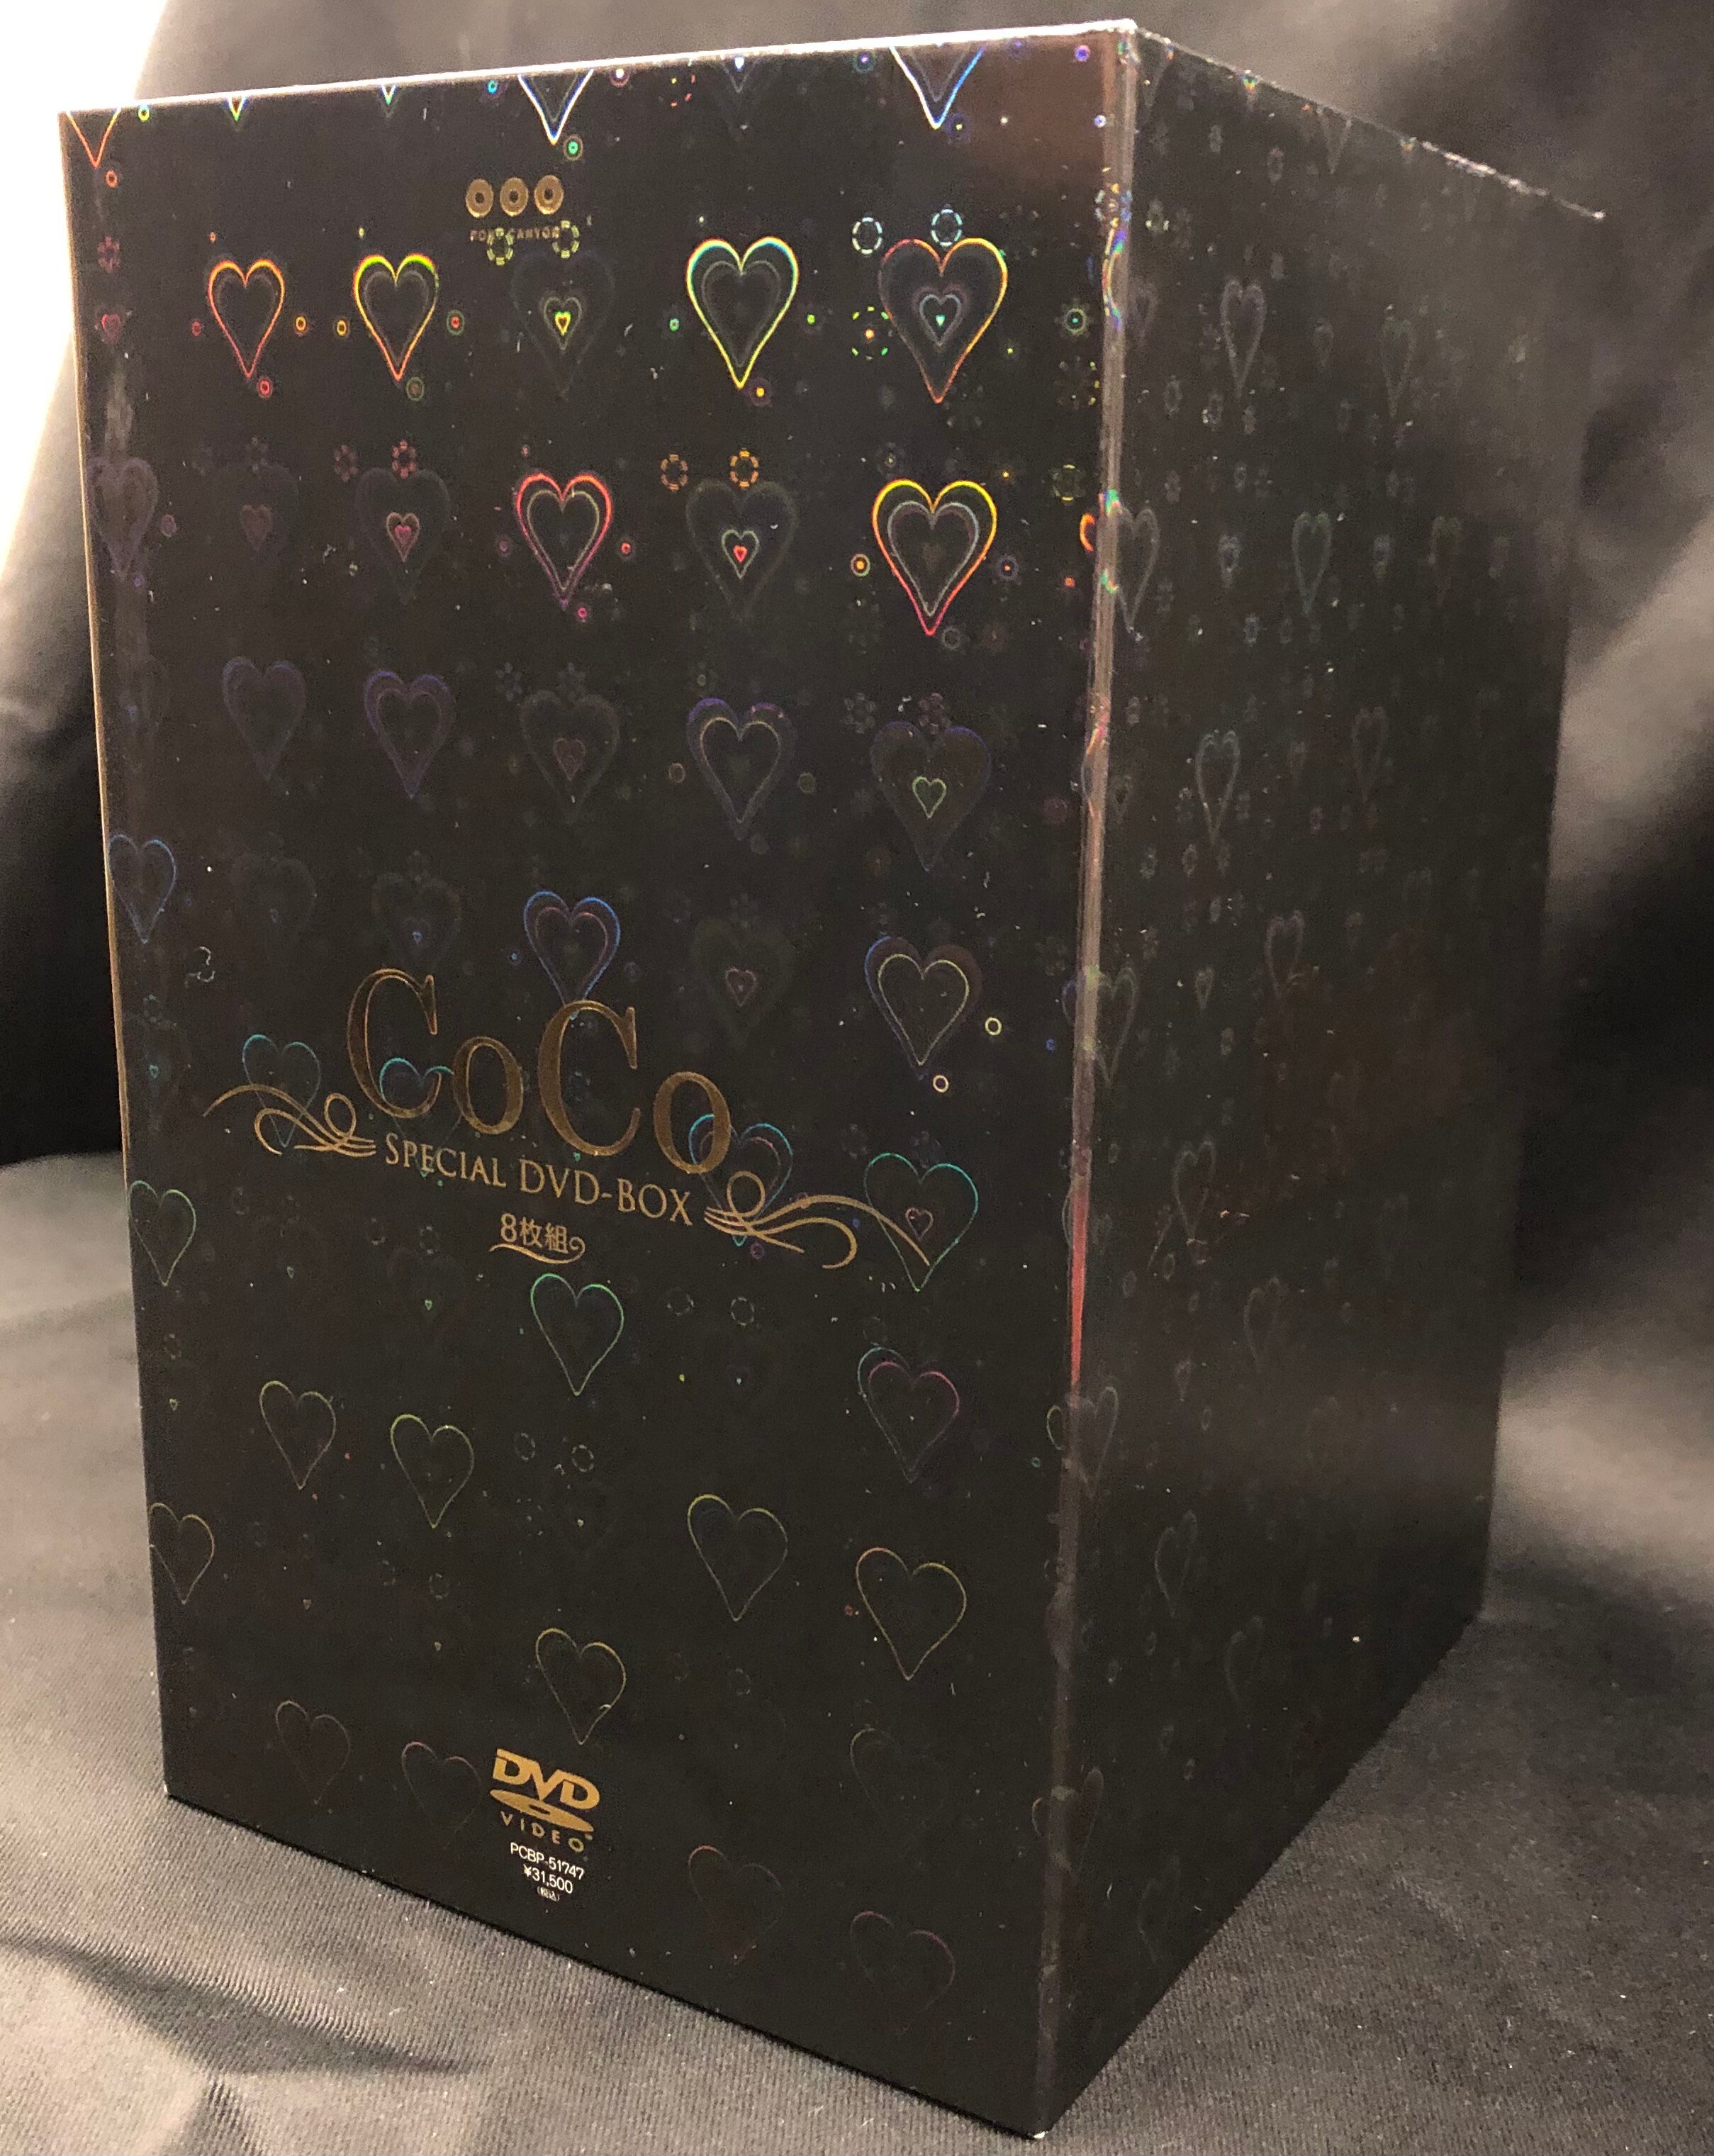 CoCo SPECIAL DVD-BOX | まんだらけ Mandarake